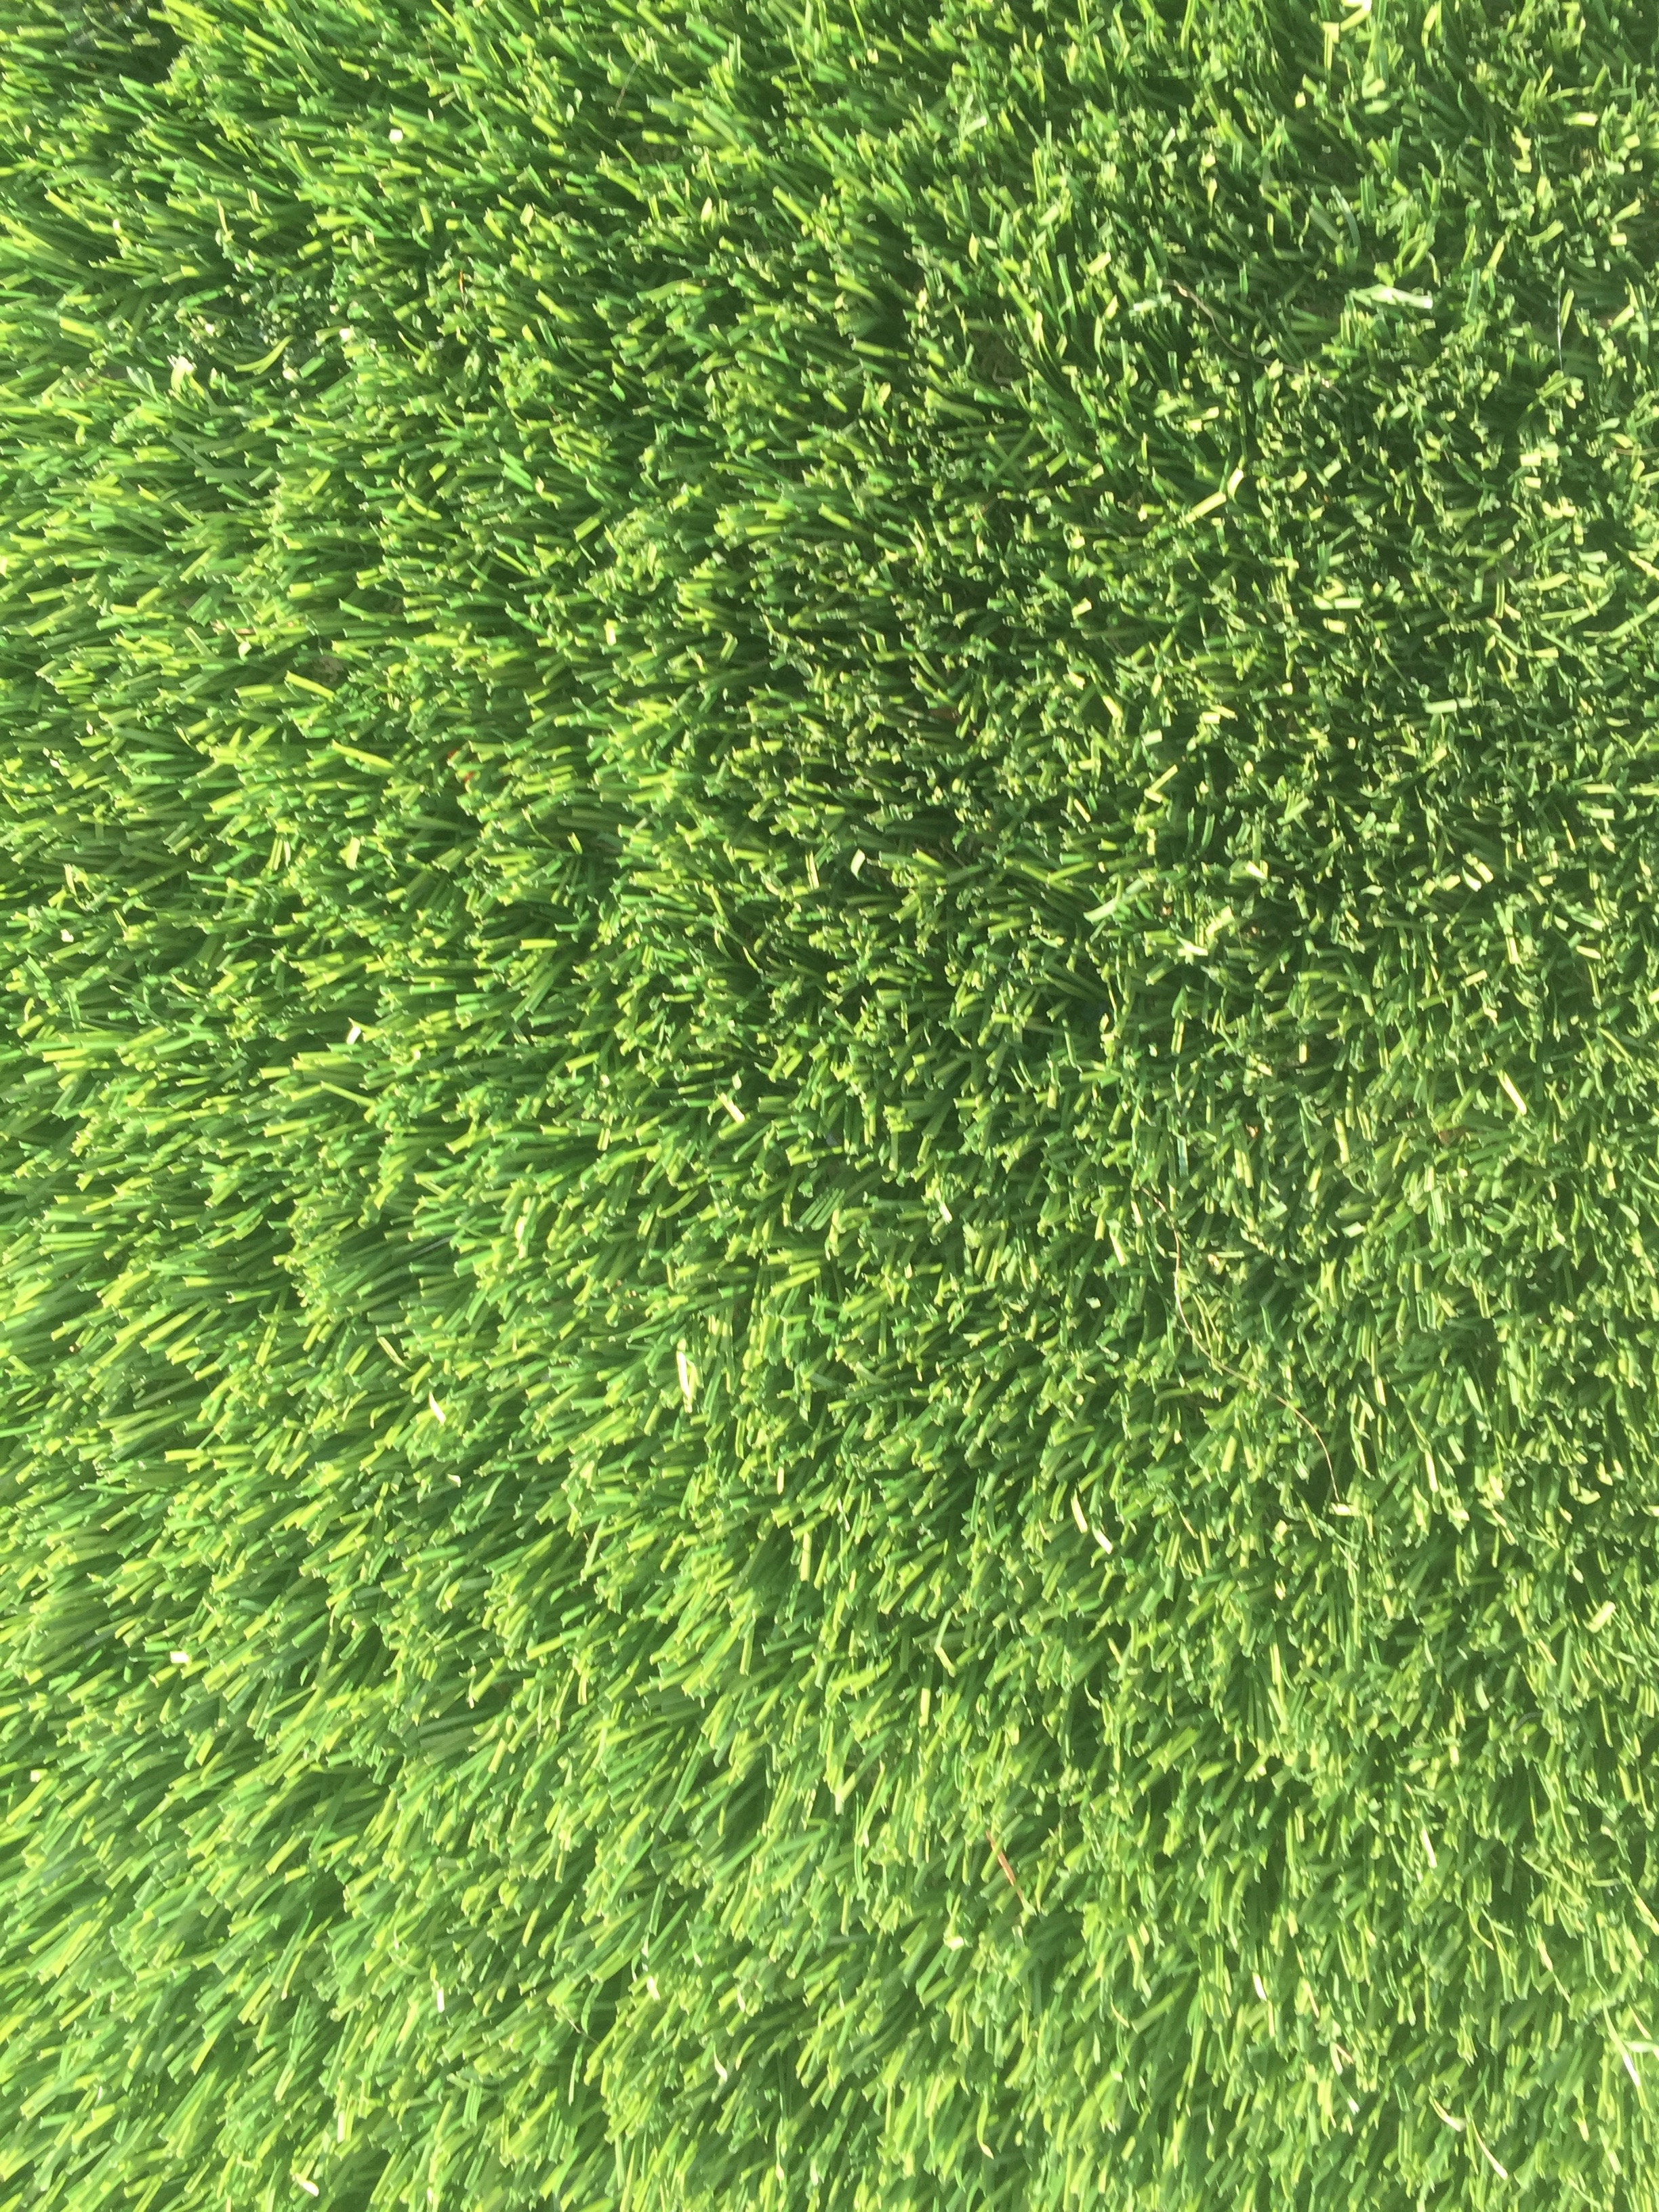 Astroturf green grass stock texture Free